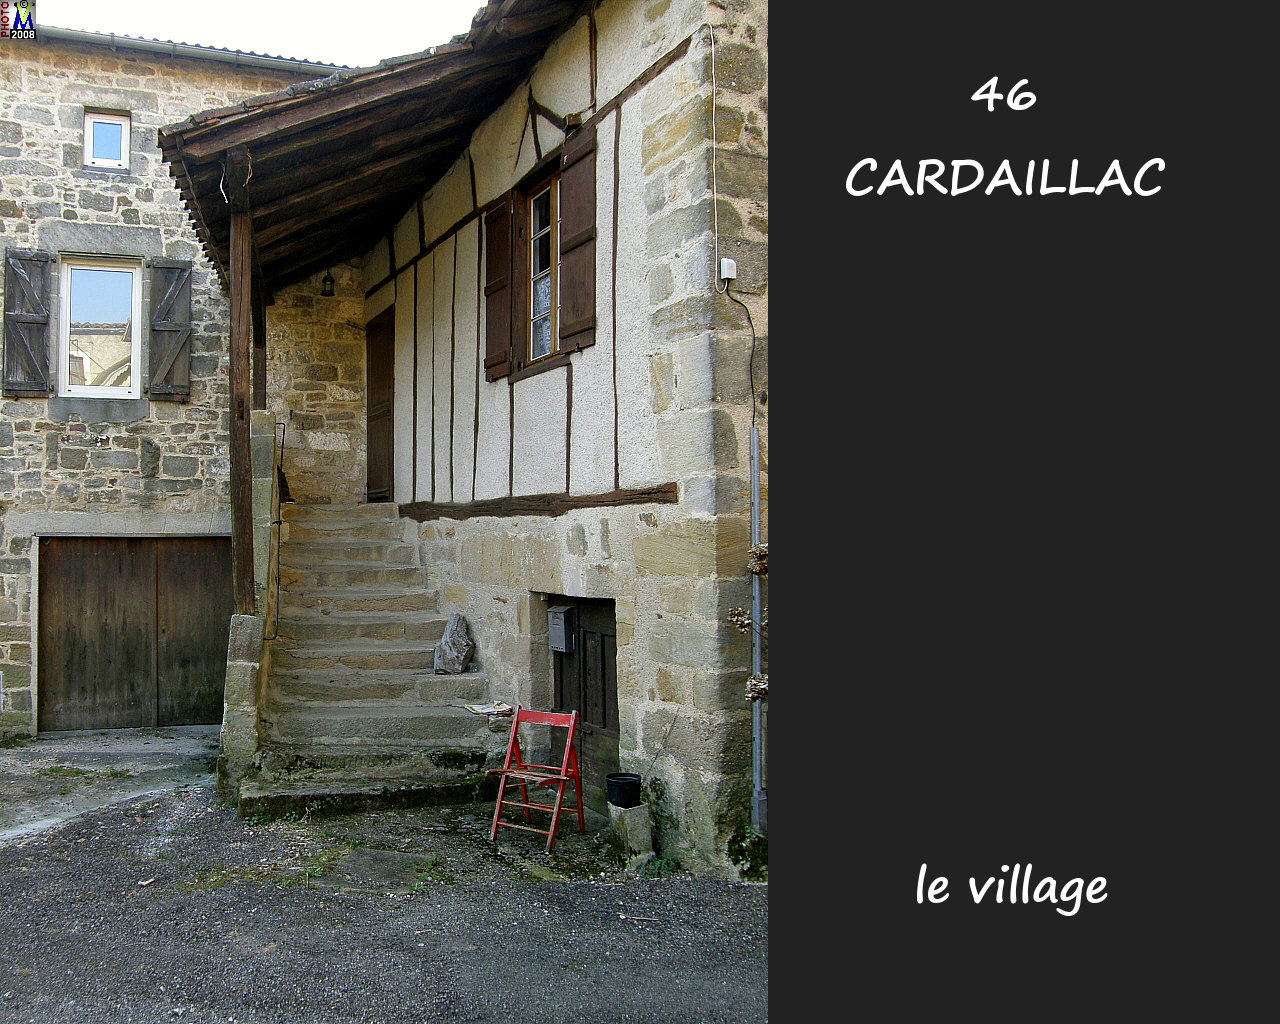 46CARDAILLAC_village_316.jpg